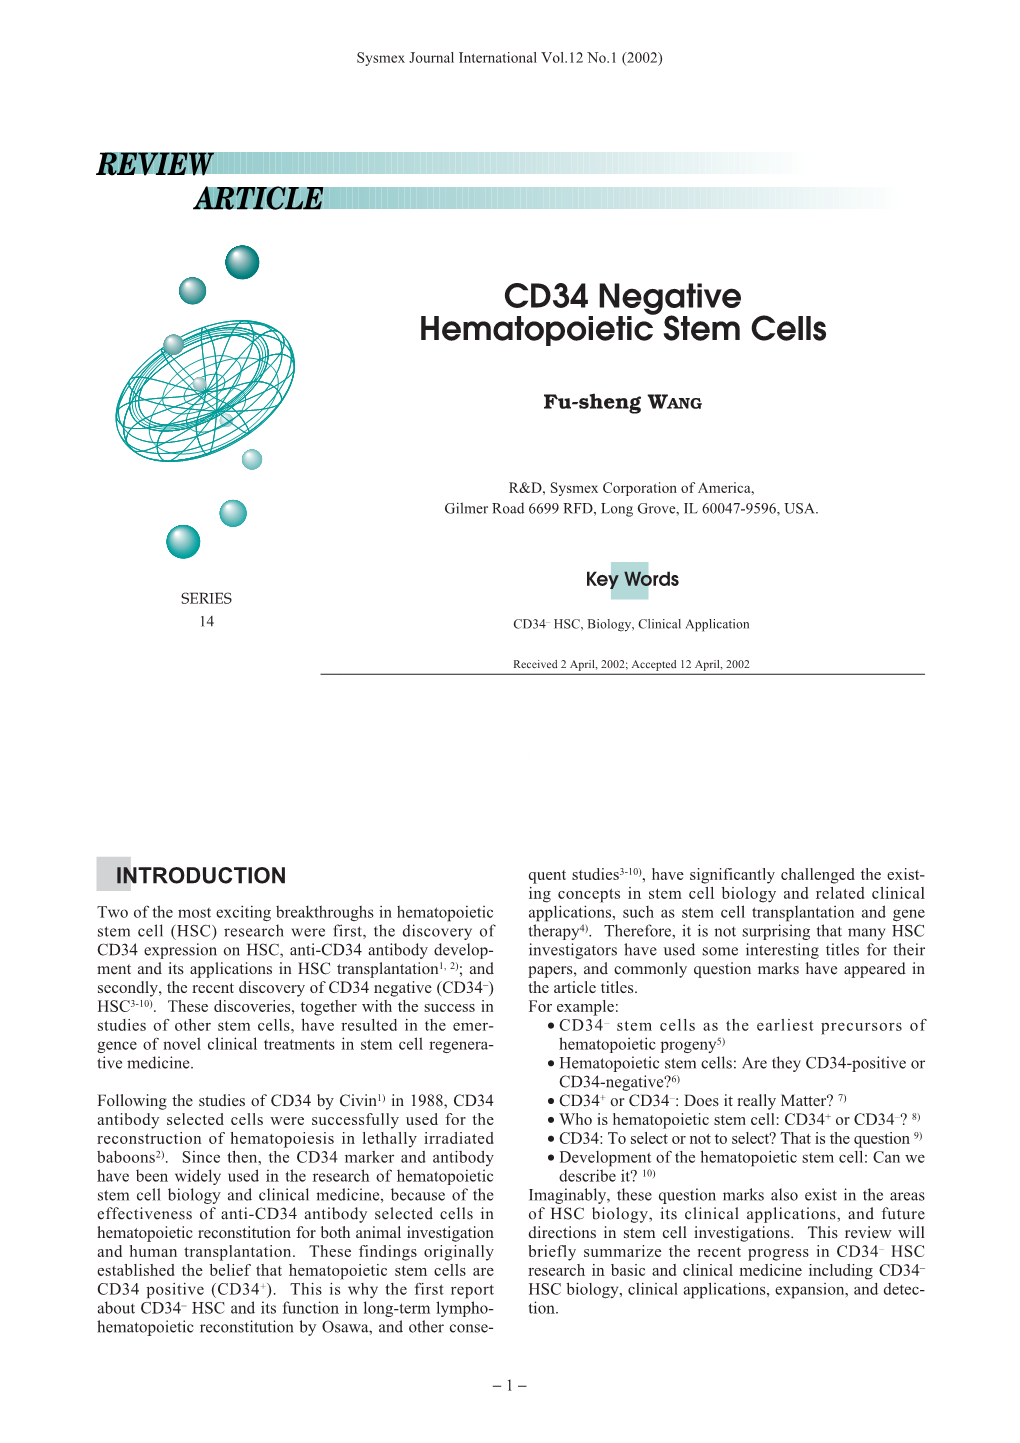 CD34 Negative Hematopoietic Stem Cells